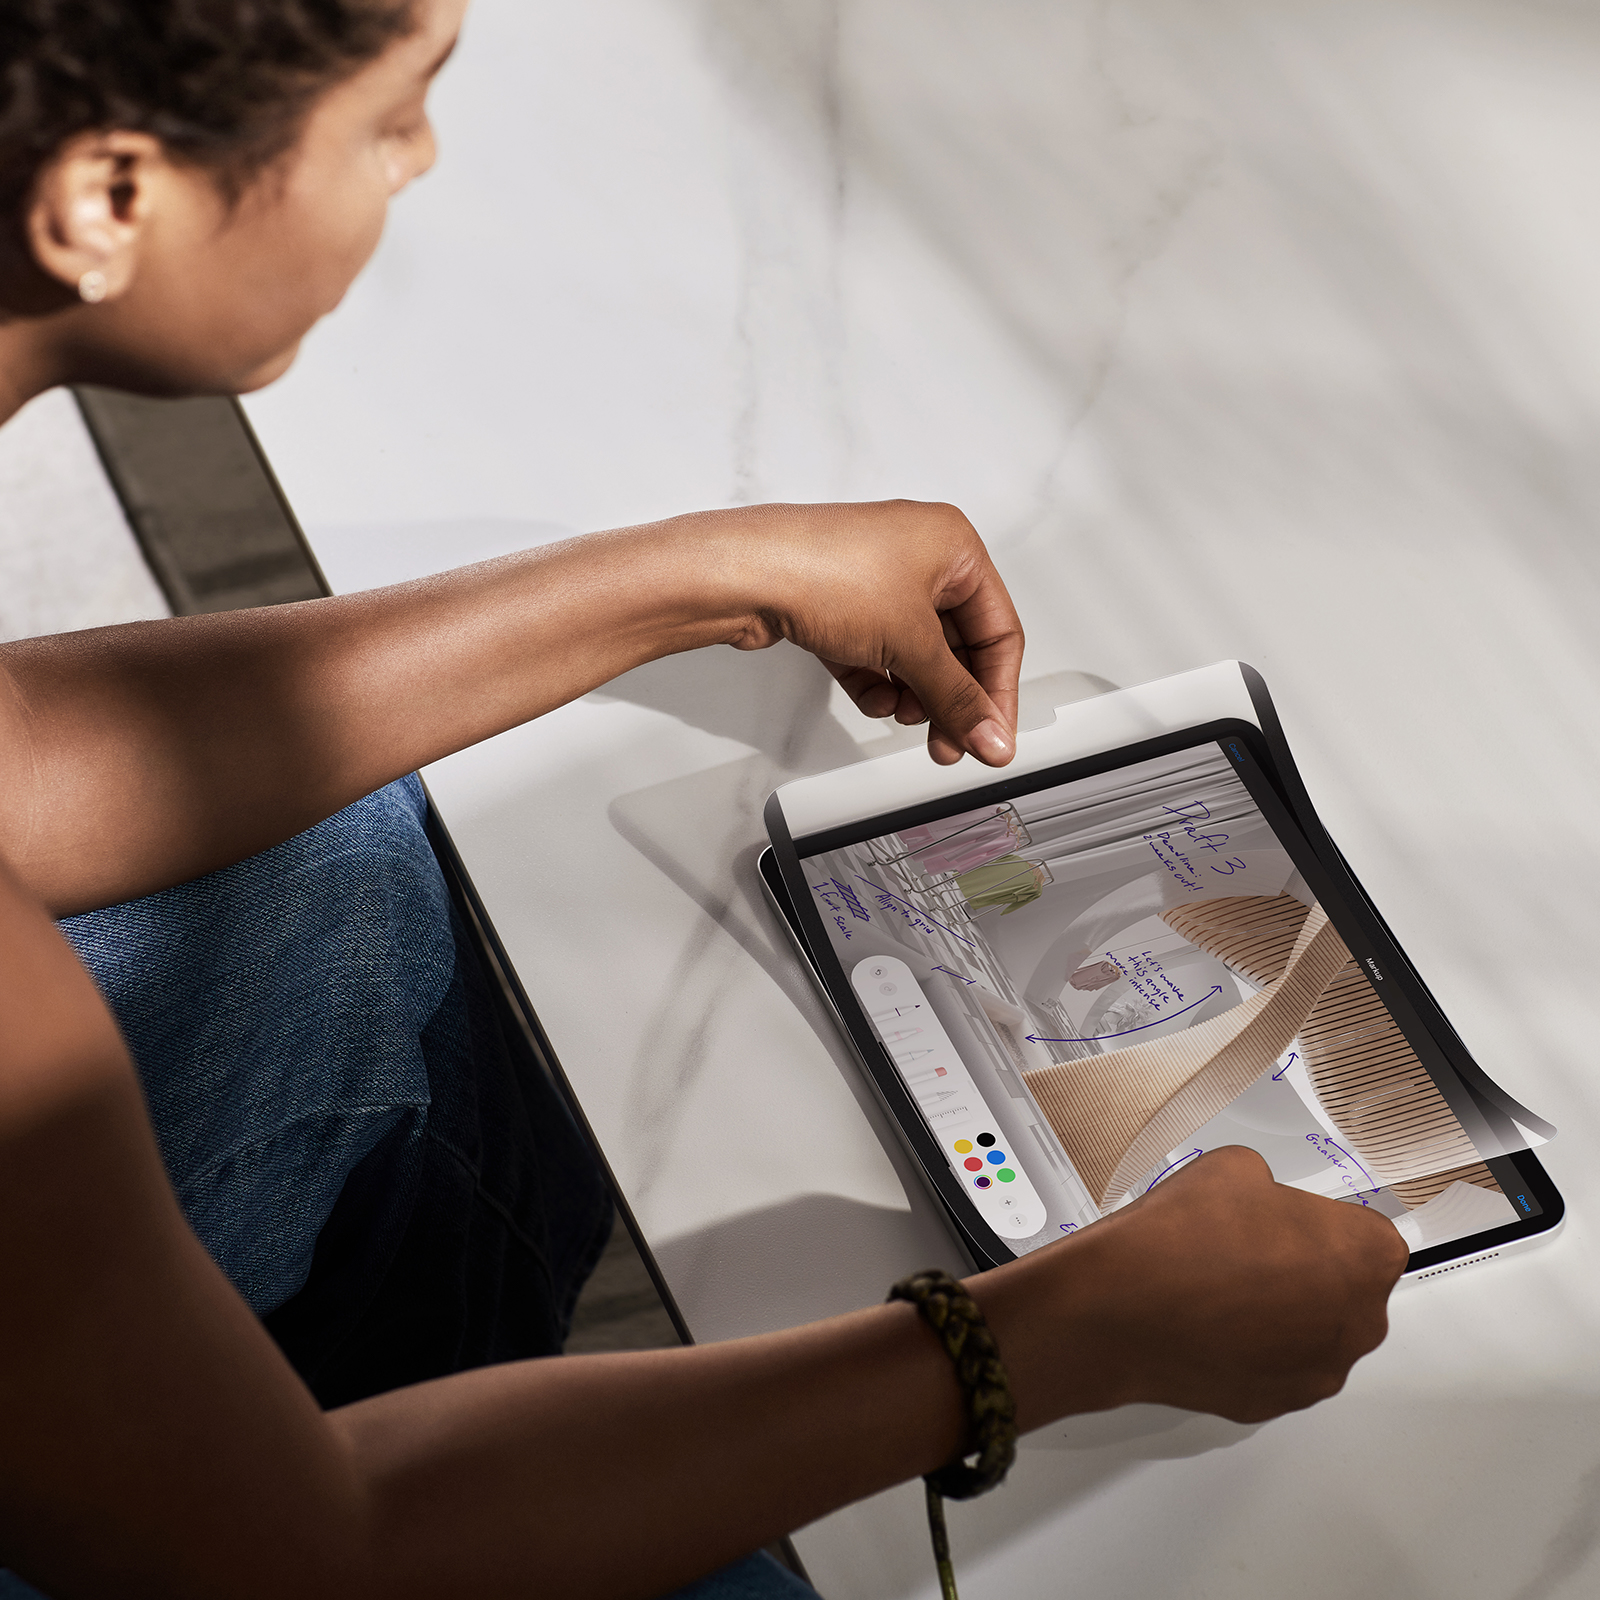 Paperfeel Verre Trempé Protection Écran Compatible avec iPad Mini